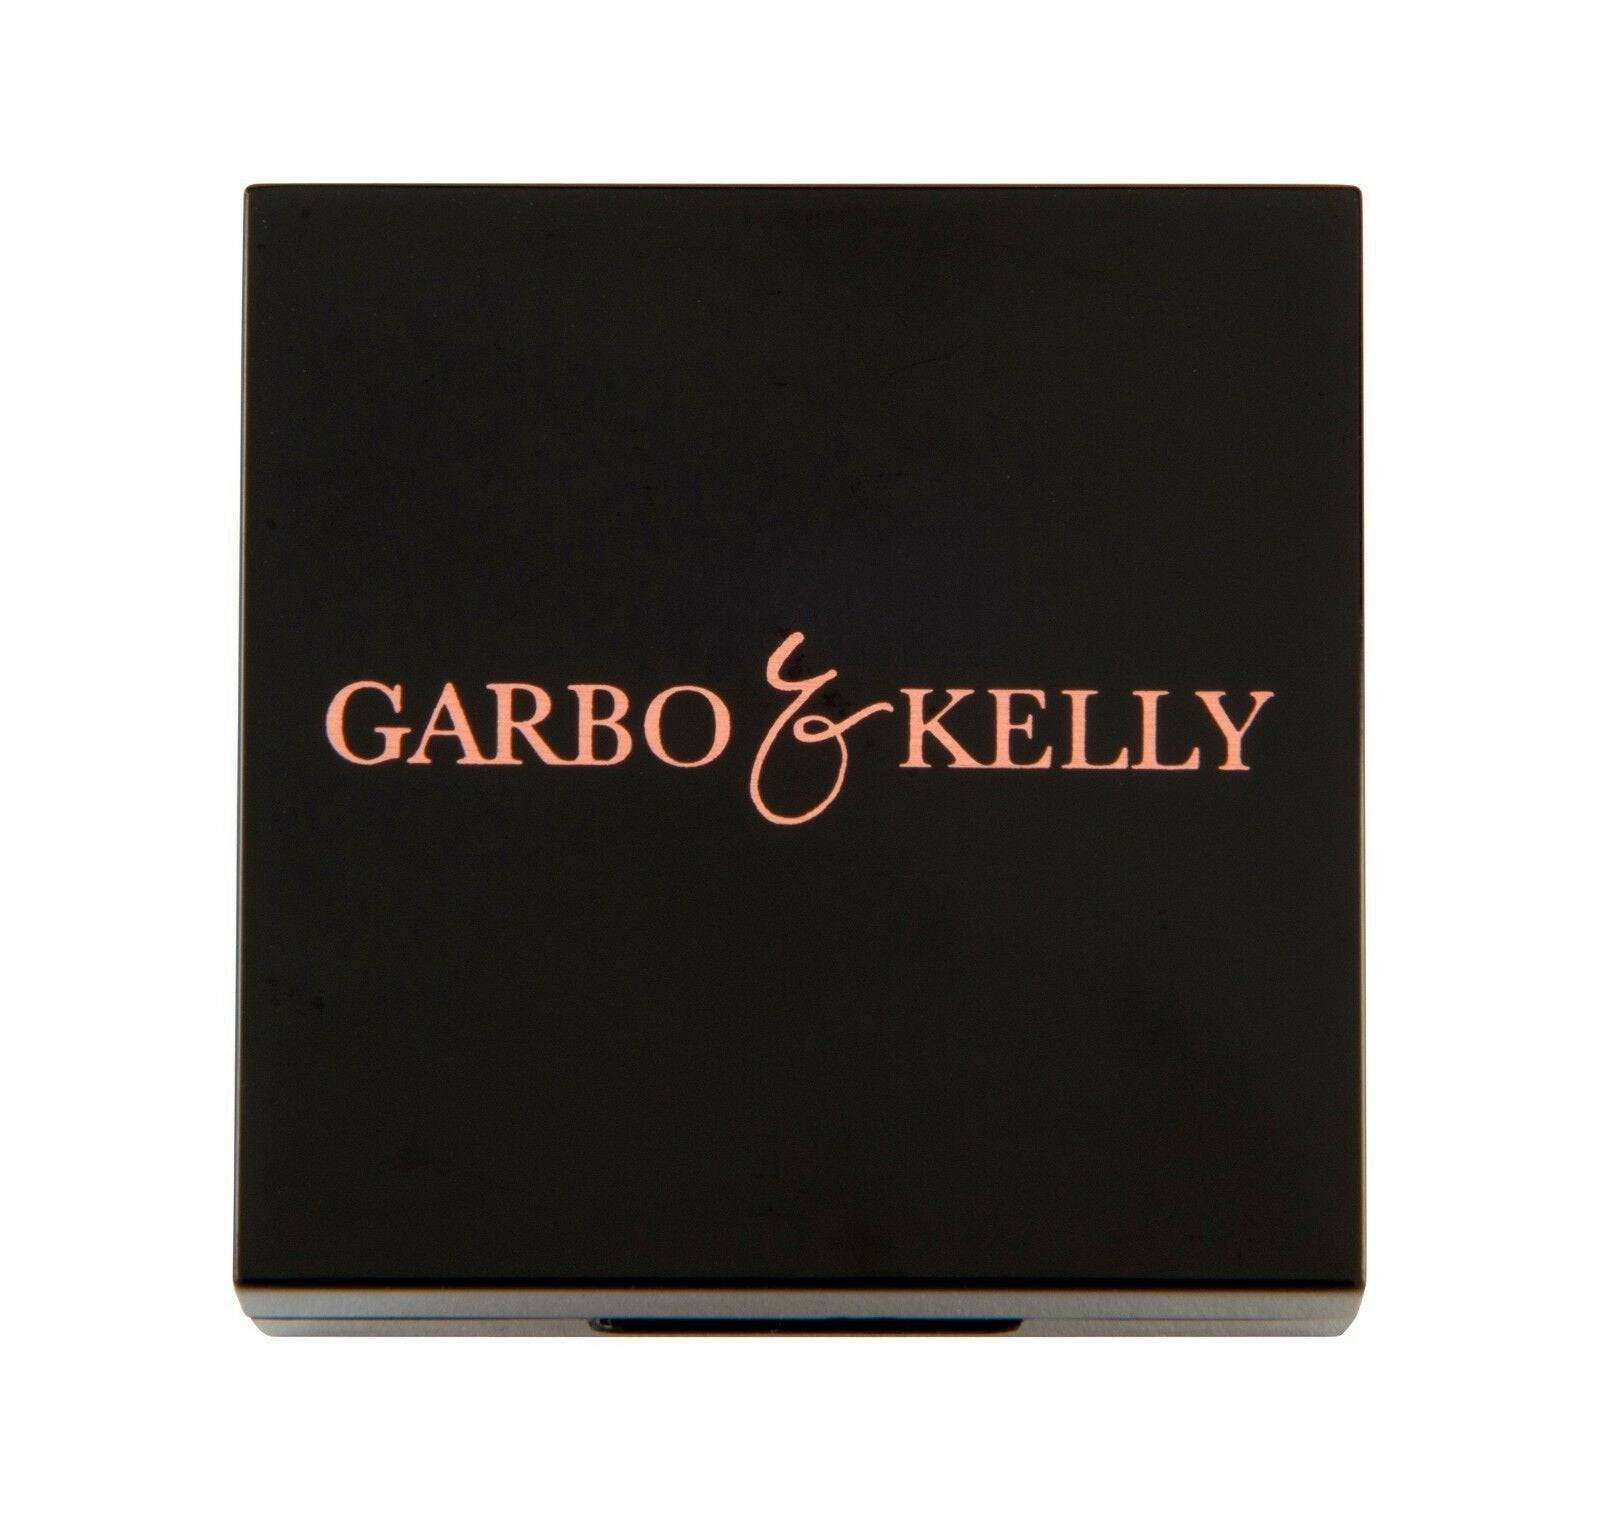 Garbo & Kelly Cool Blonde - Brow Powder x 1 - On Line Hair Depot